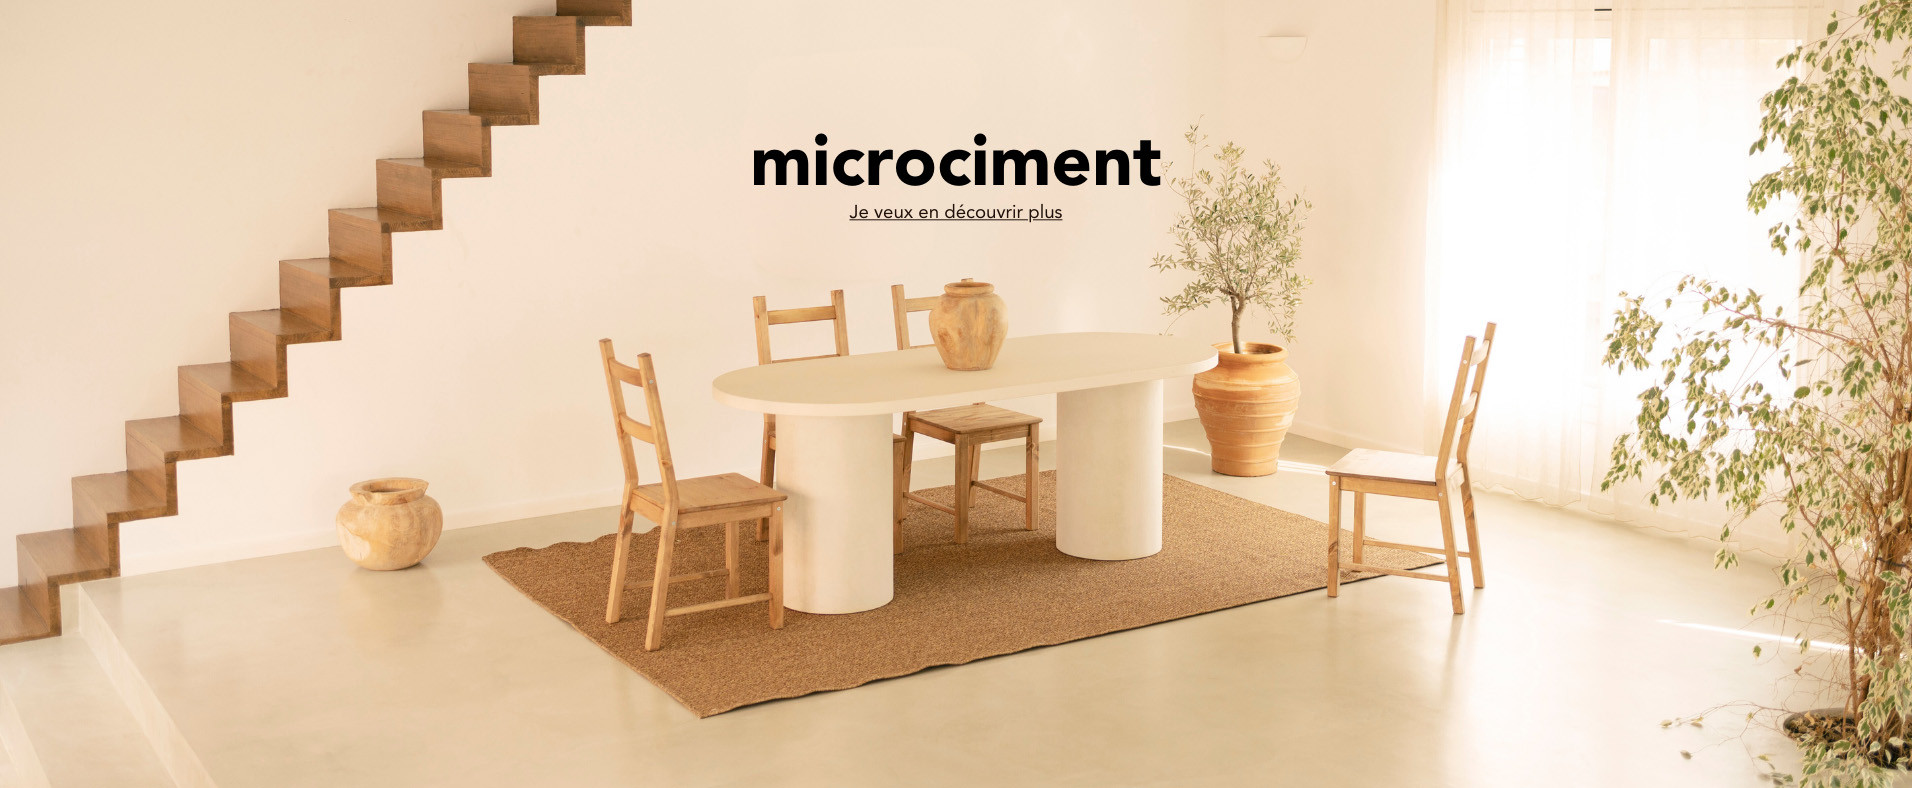 microciment